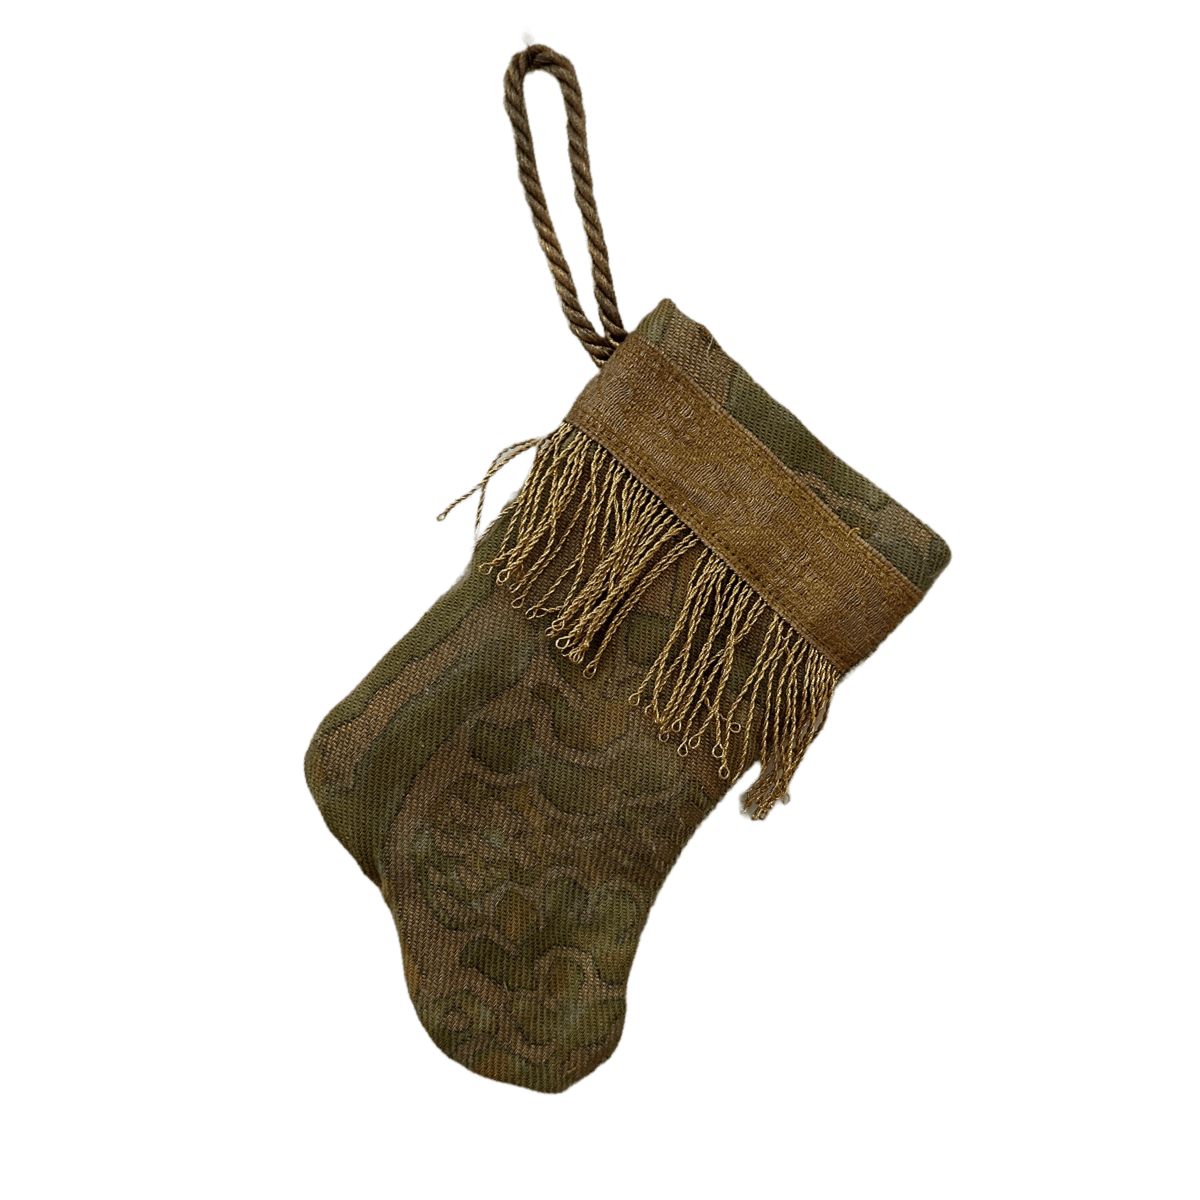 Handmade Mini Stocking Ornament from Antique & Vintage Textiles, Trims | Green Fortuny Ornament B. Viz Design E 